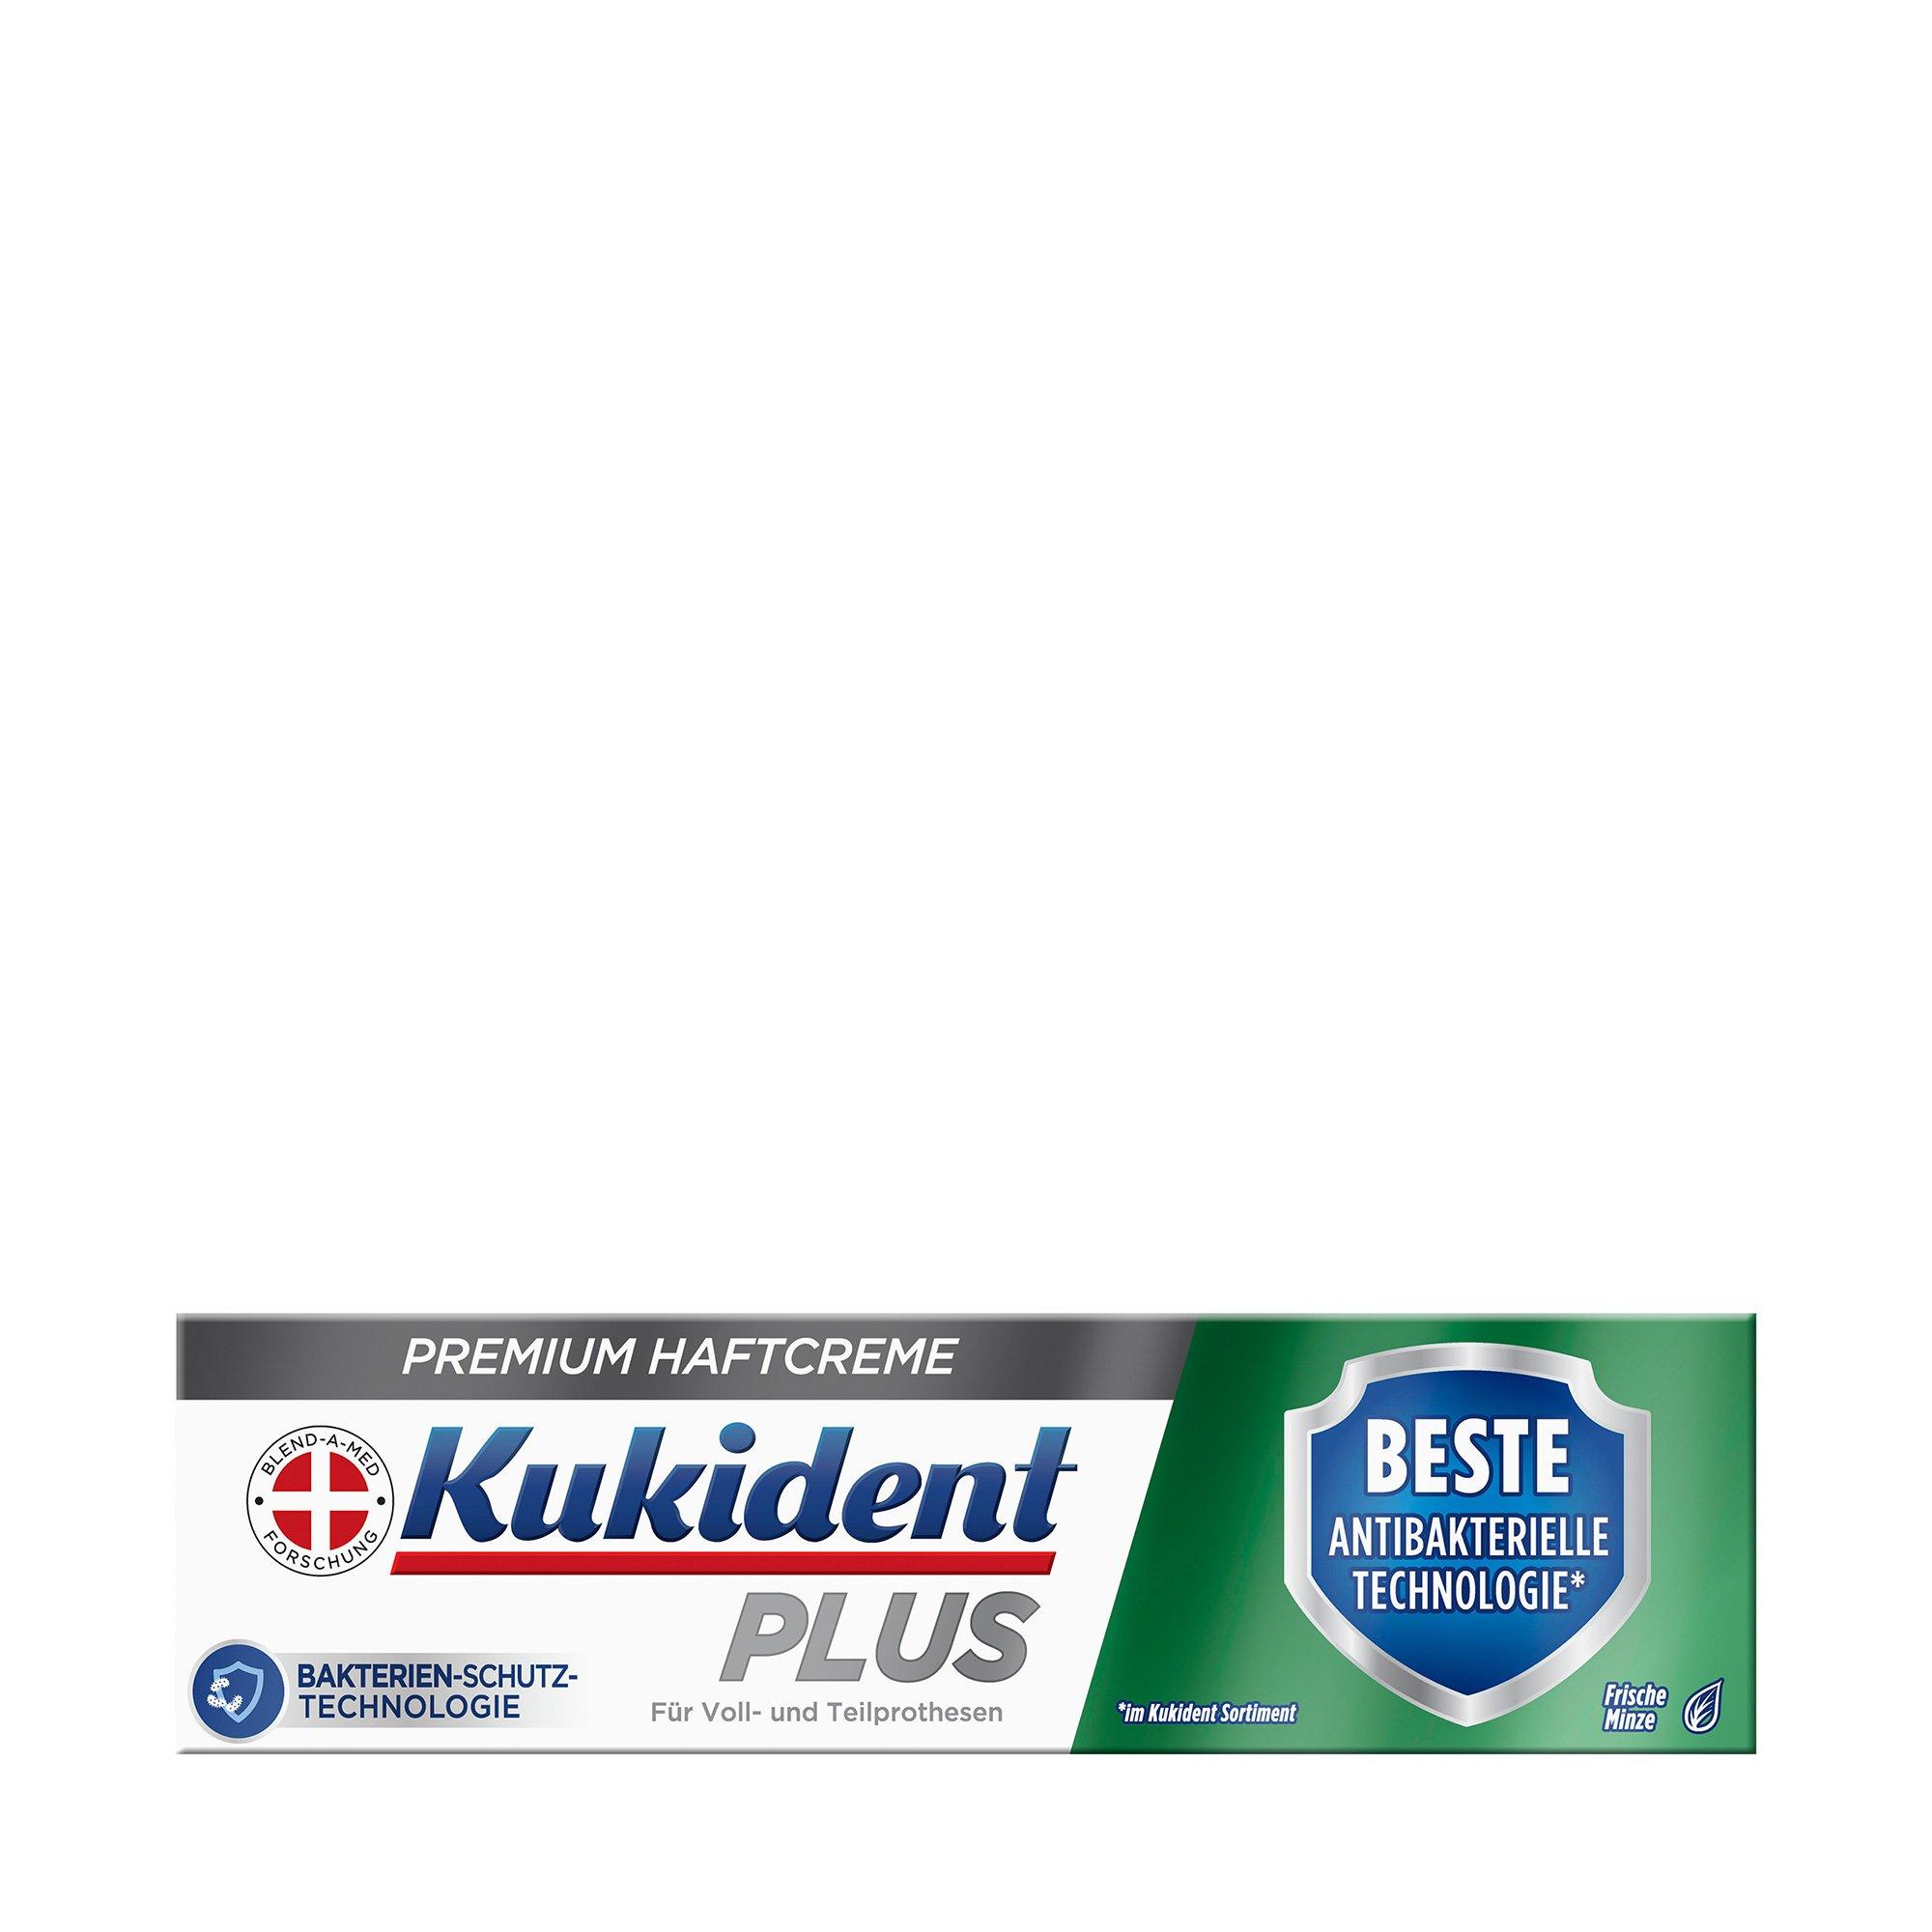 Image of Kukident Plus Beste antibakterielle Technologie Premium Haftcreme - 40g